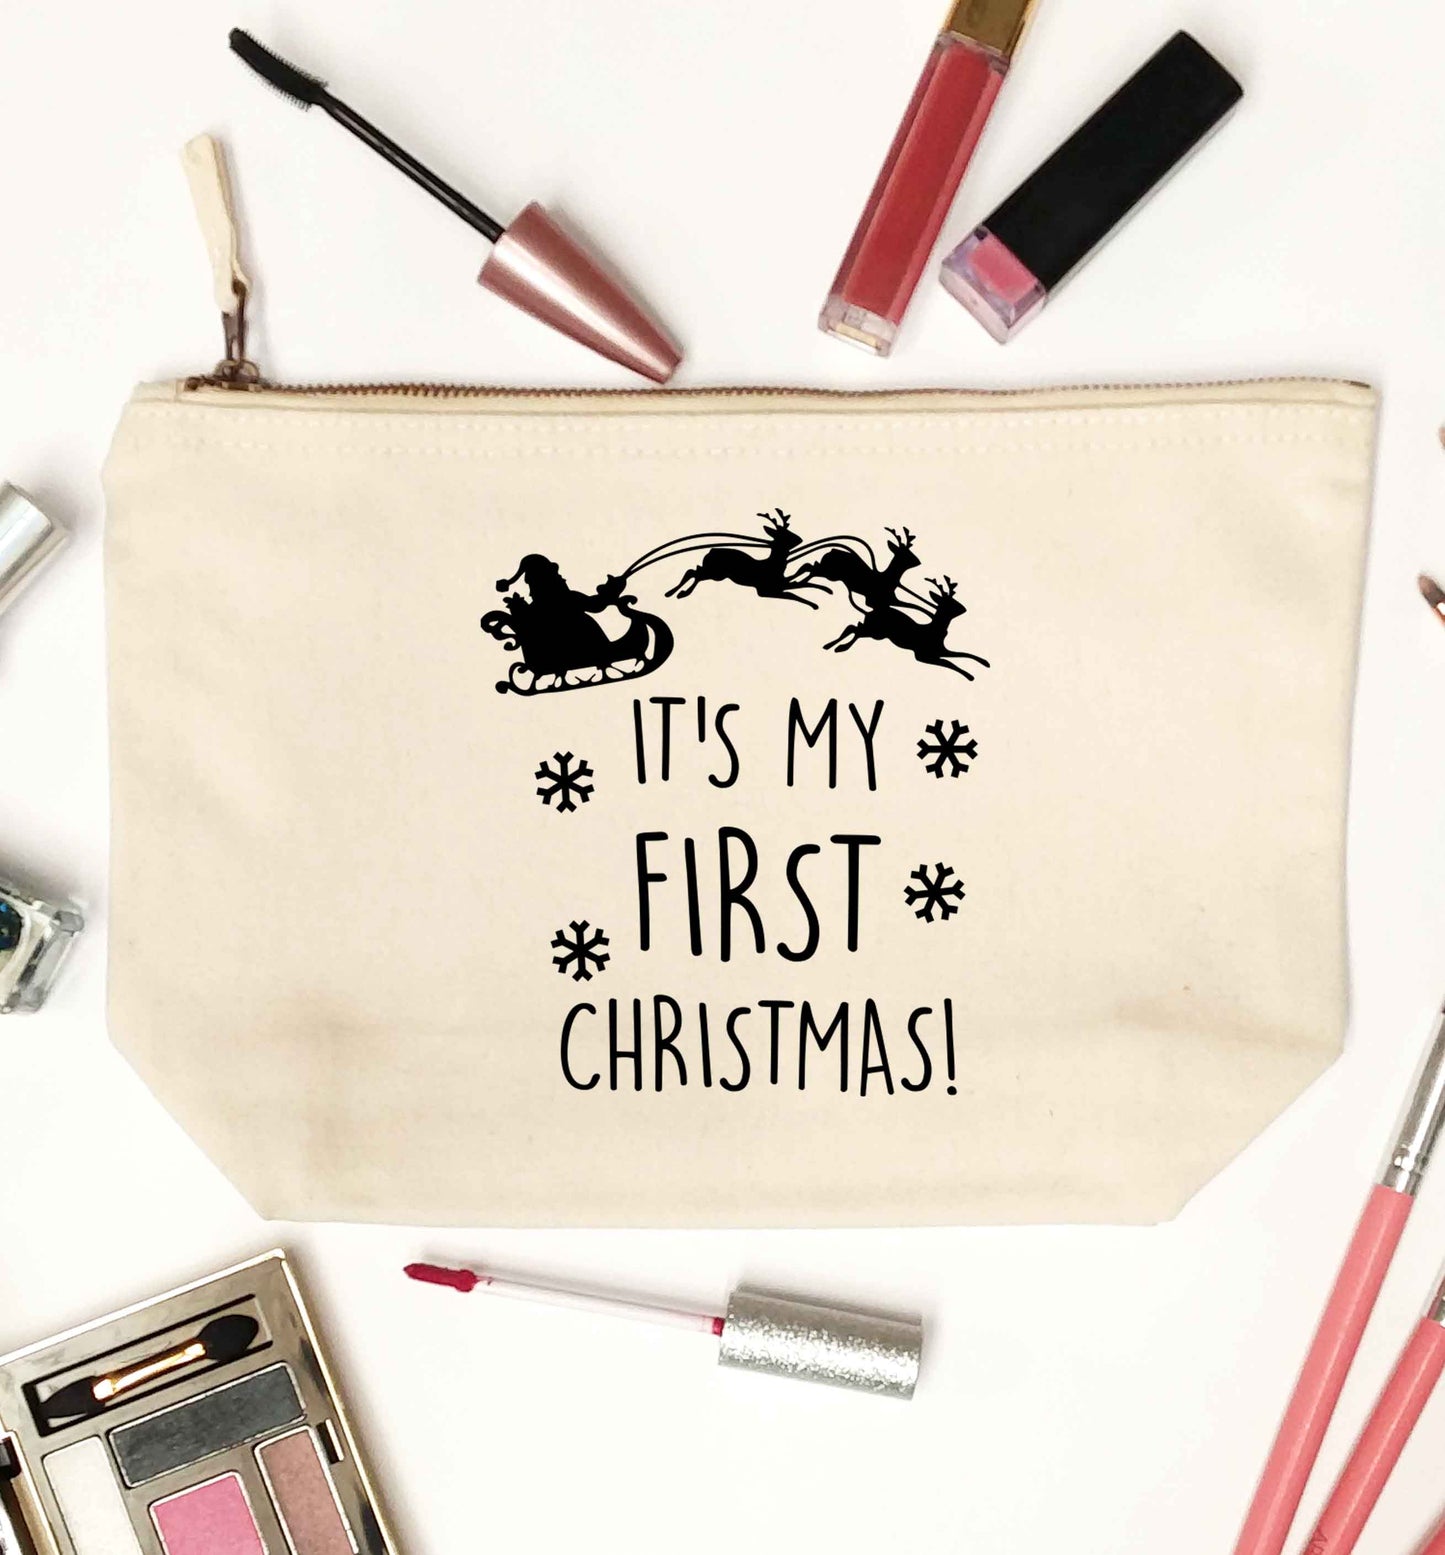 It's my first Christmas - Santa sleigh text natural makeup bag